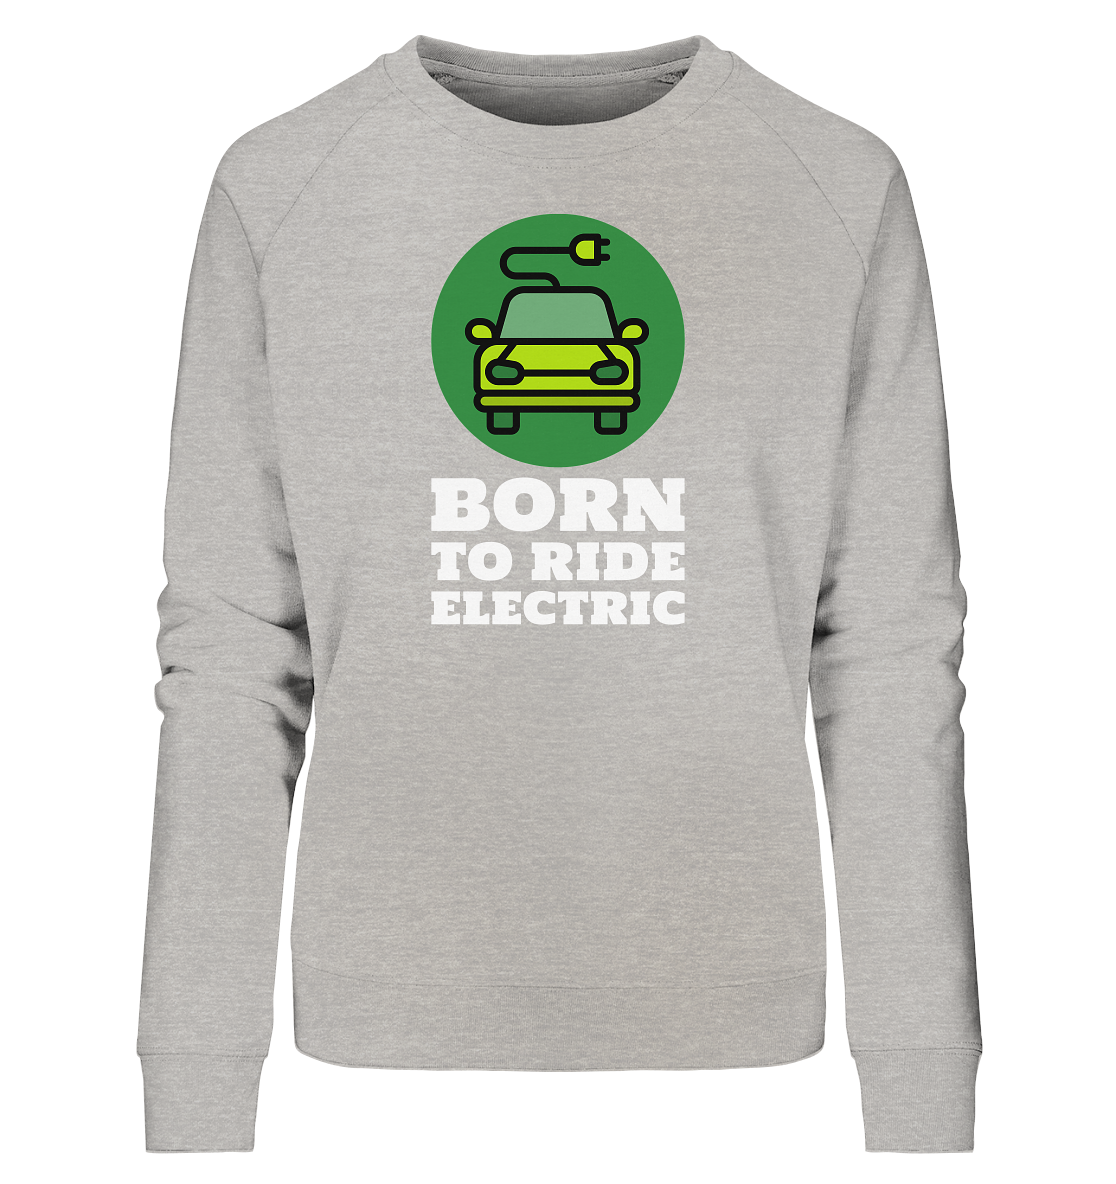 Born to ride electric ORGANIC - Ladies Organic Sweatshirt